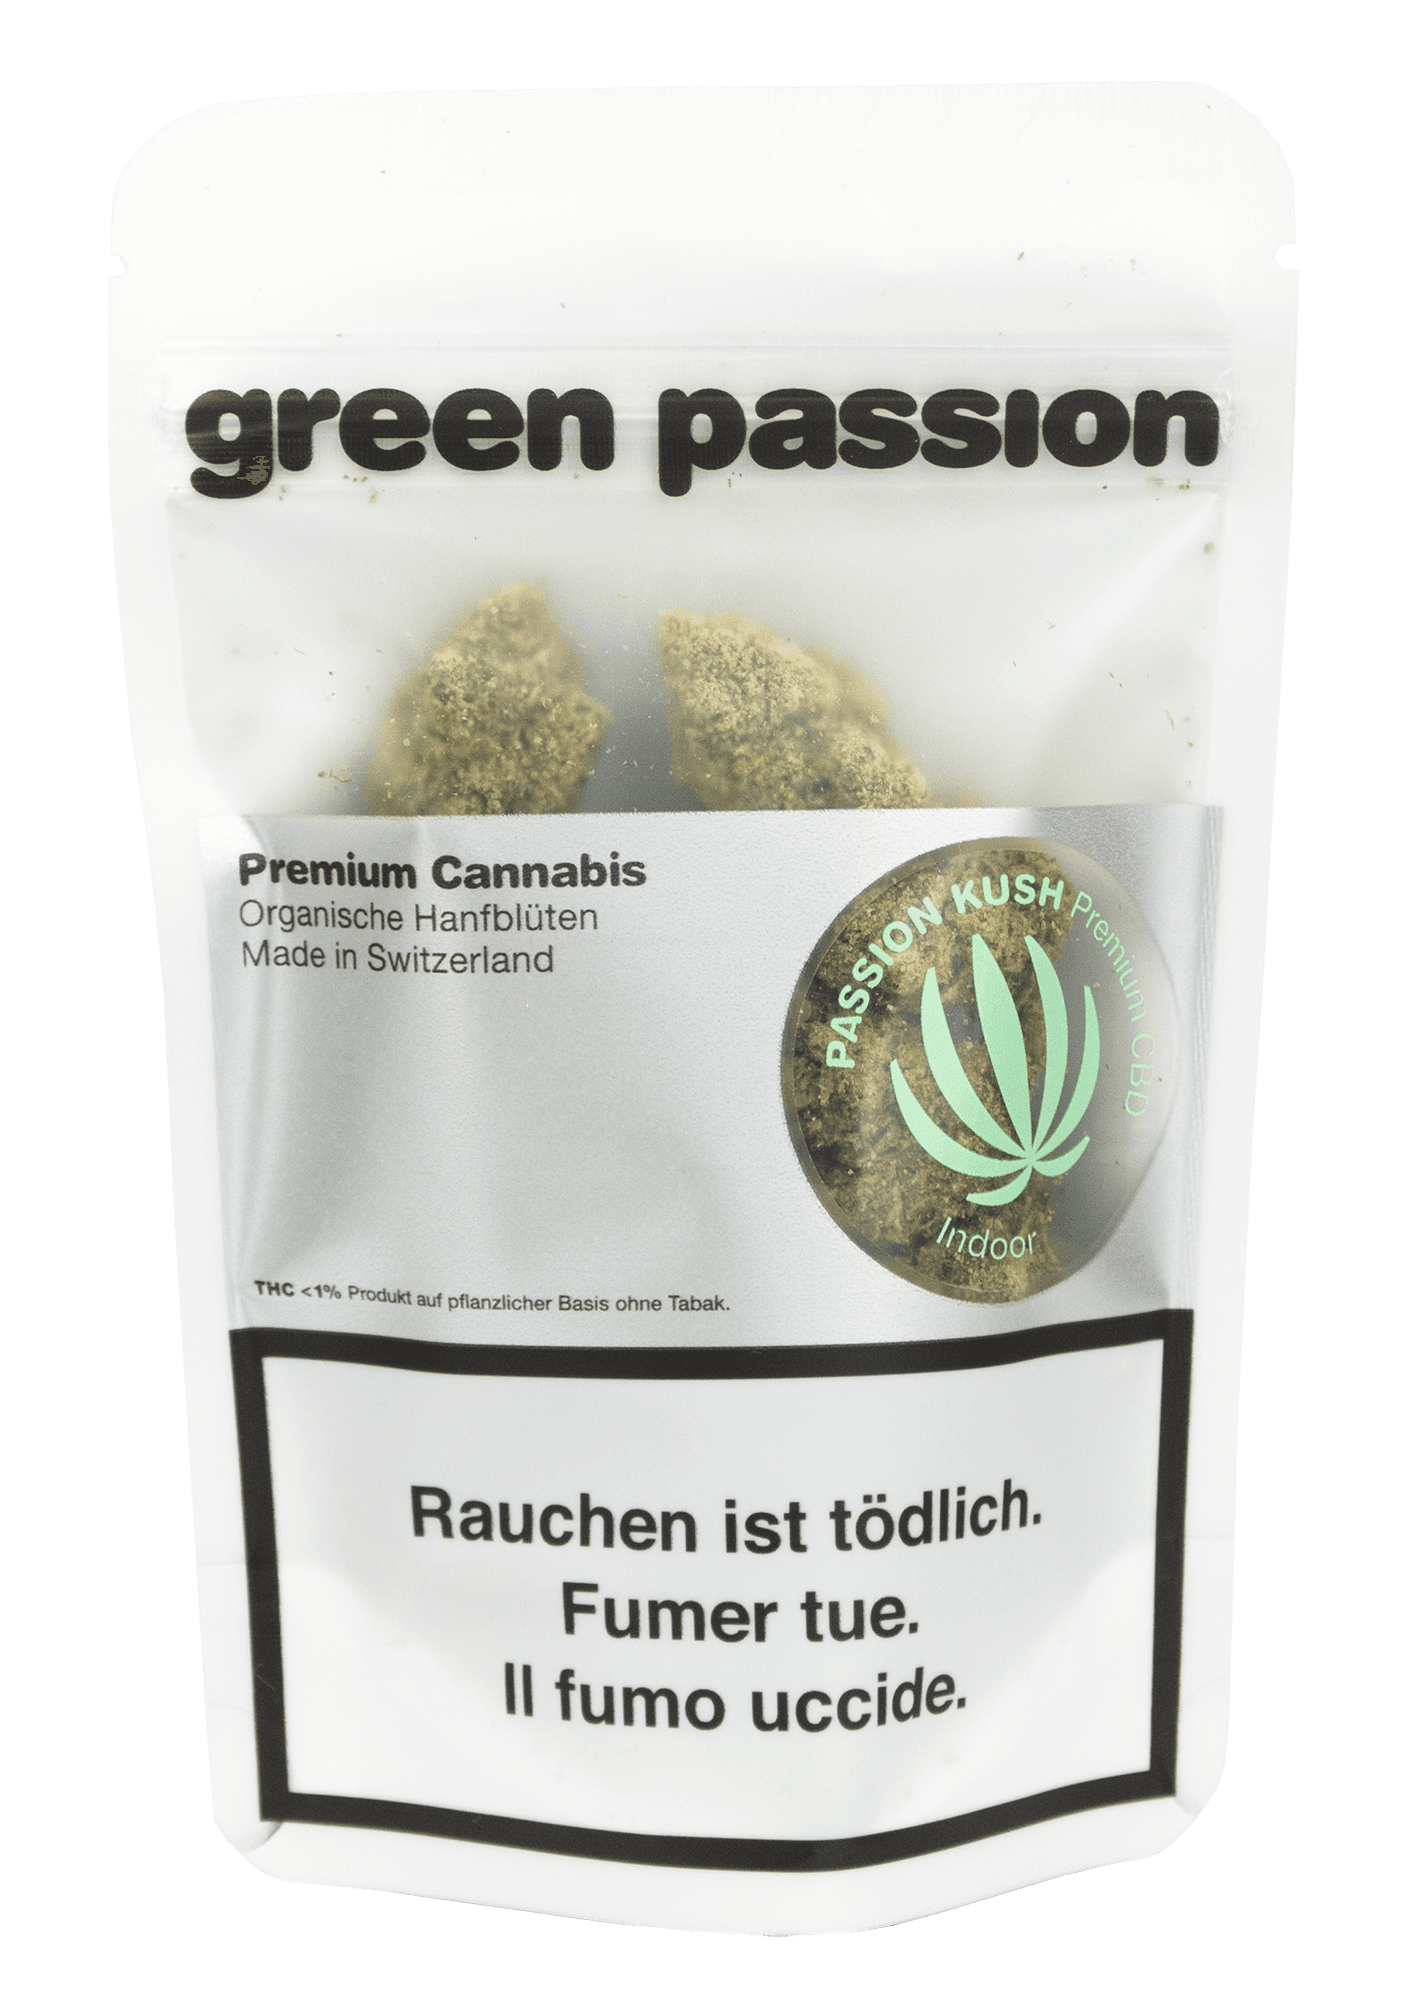 Green Passion Passion Kush